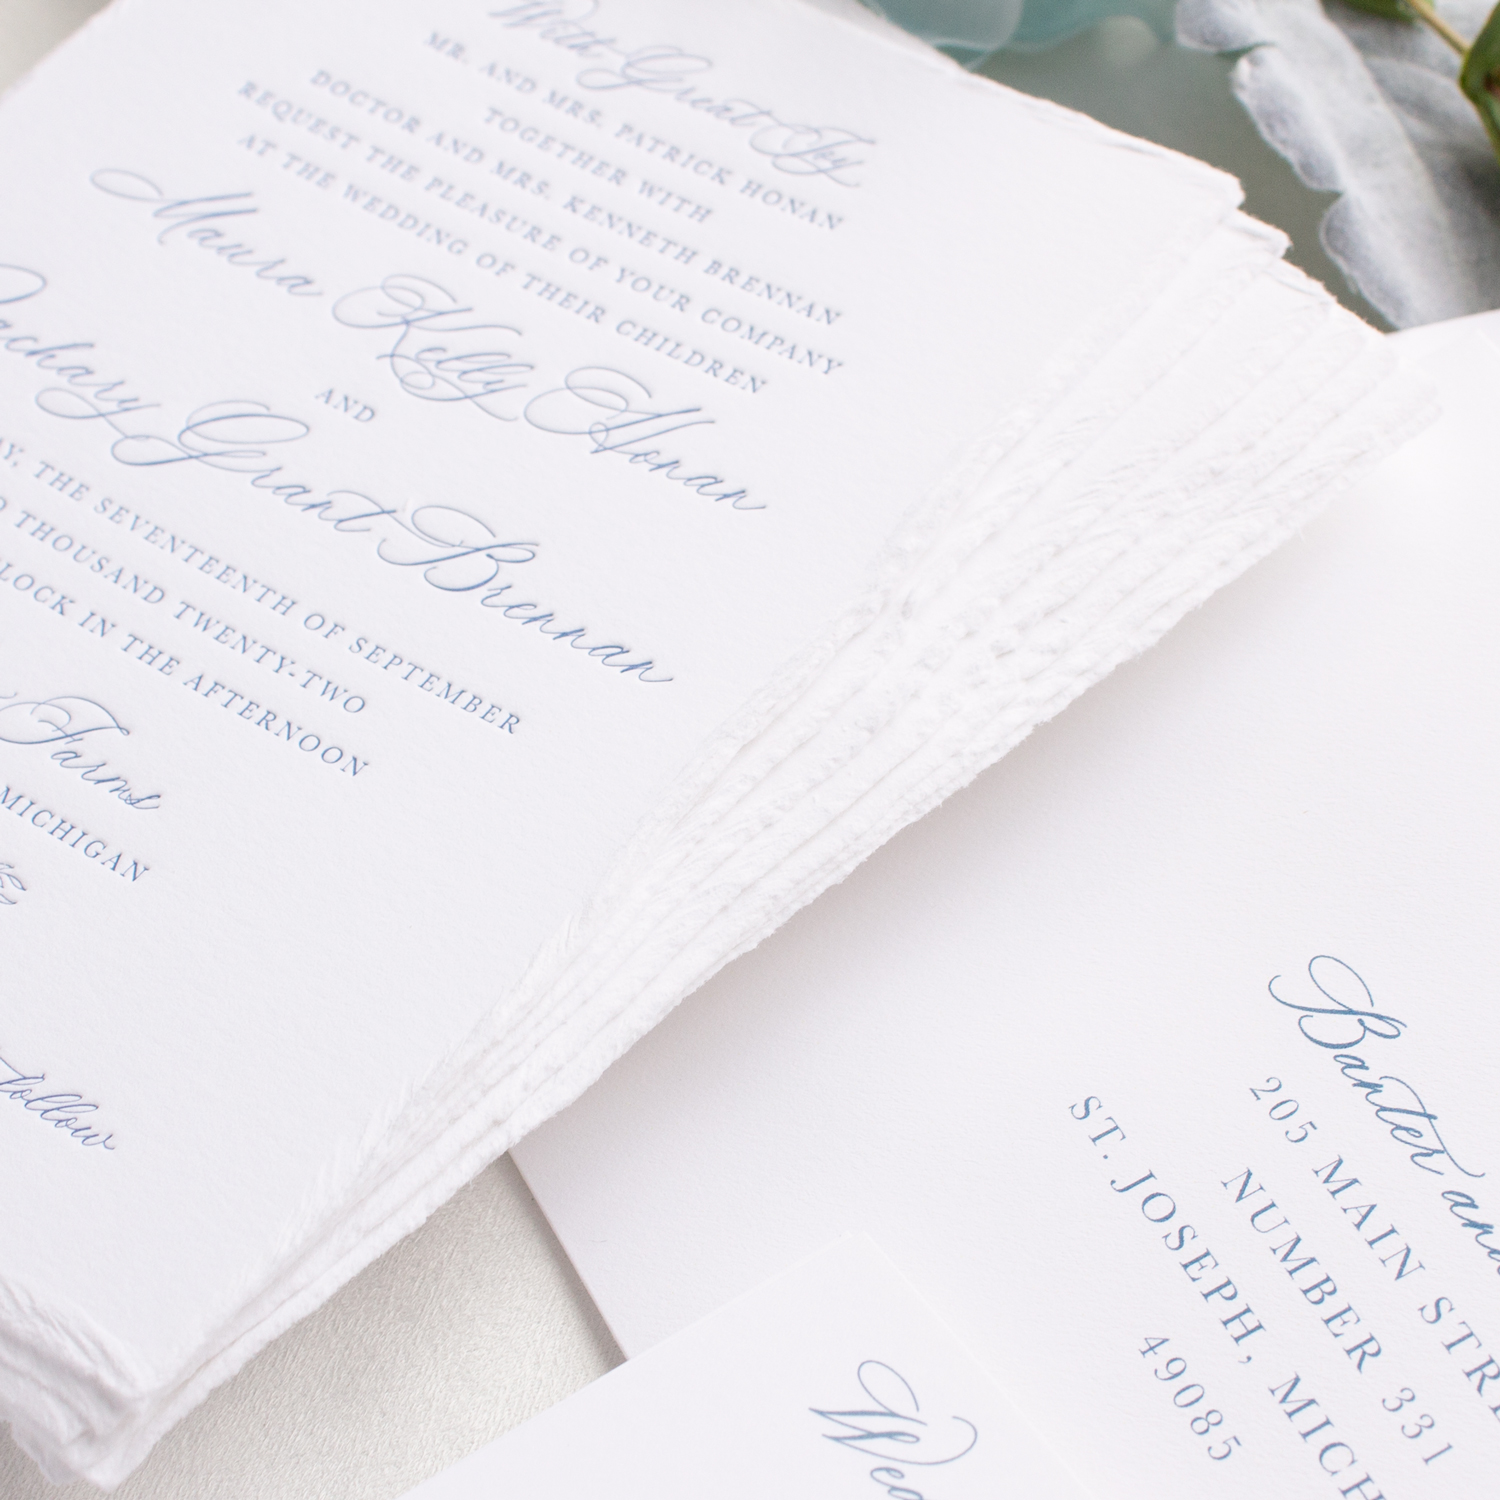 Deckle edge wedding invitations